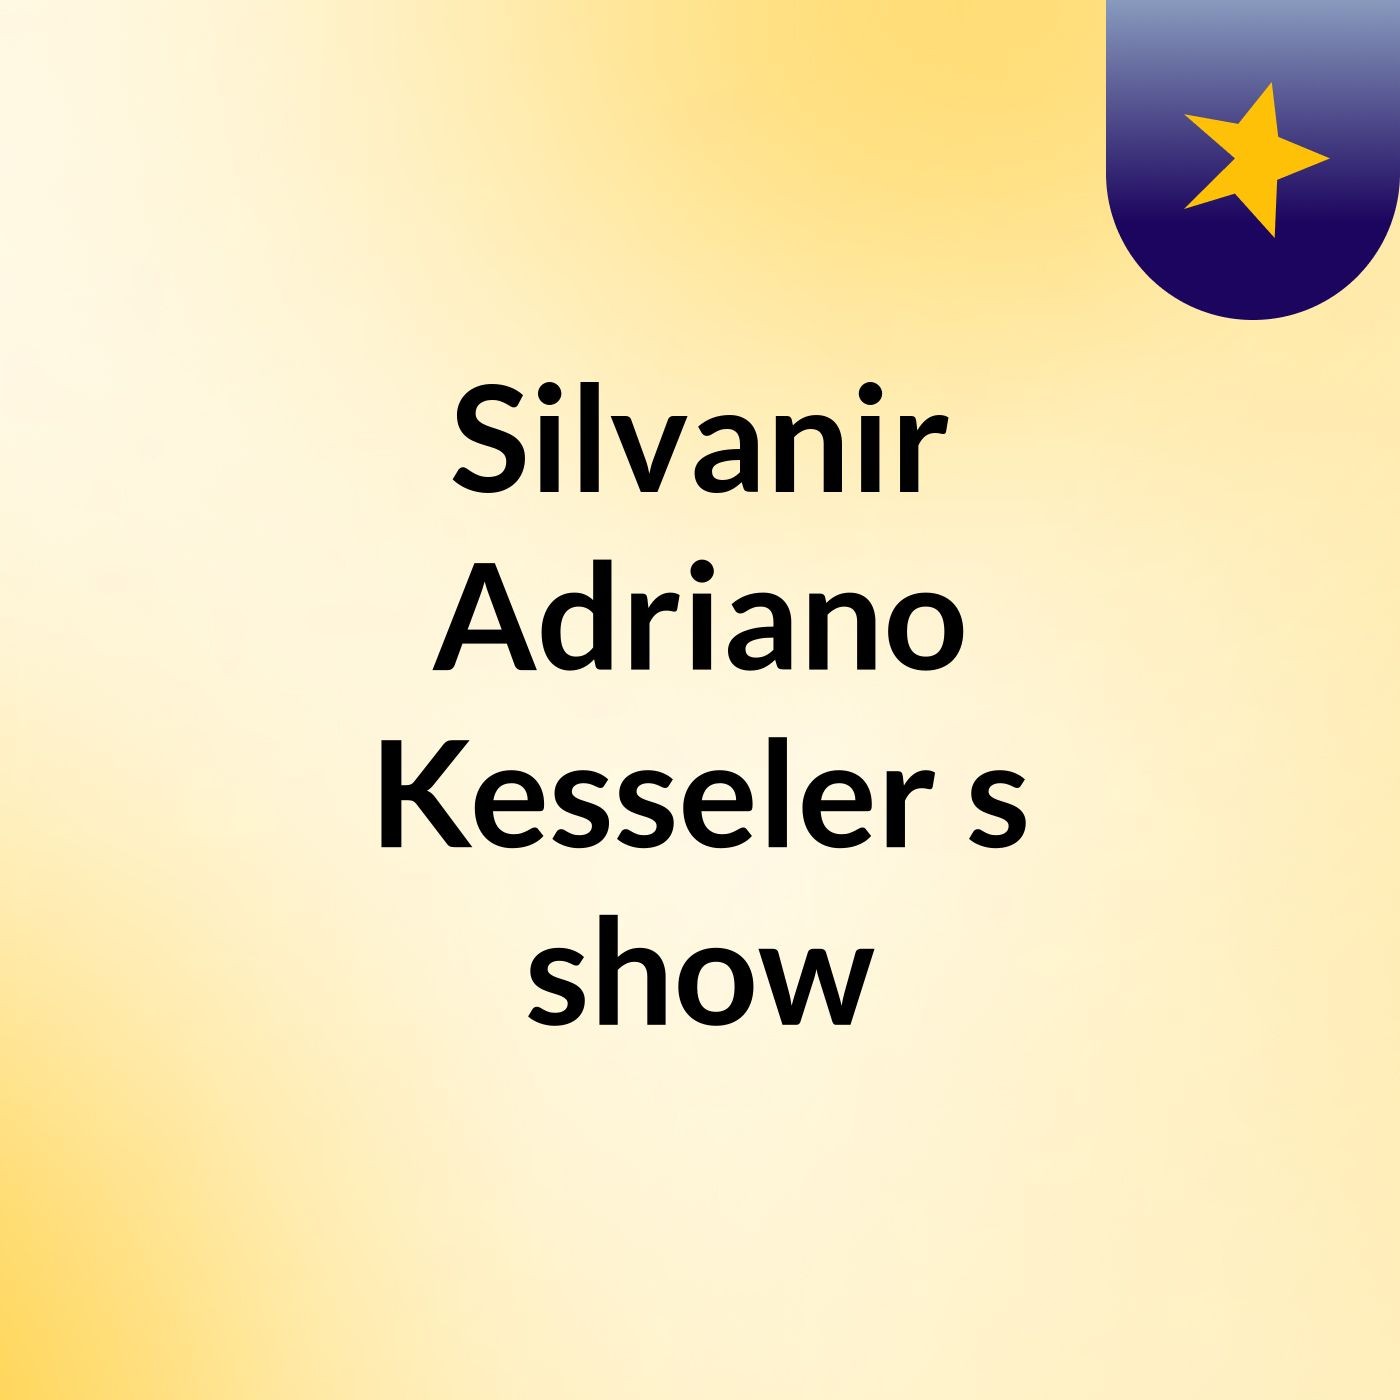 Silvanir Adriano Kesseler's show